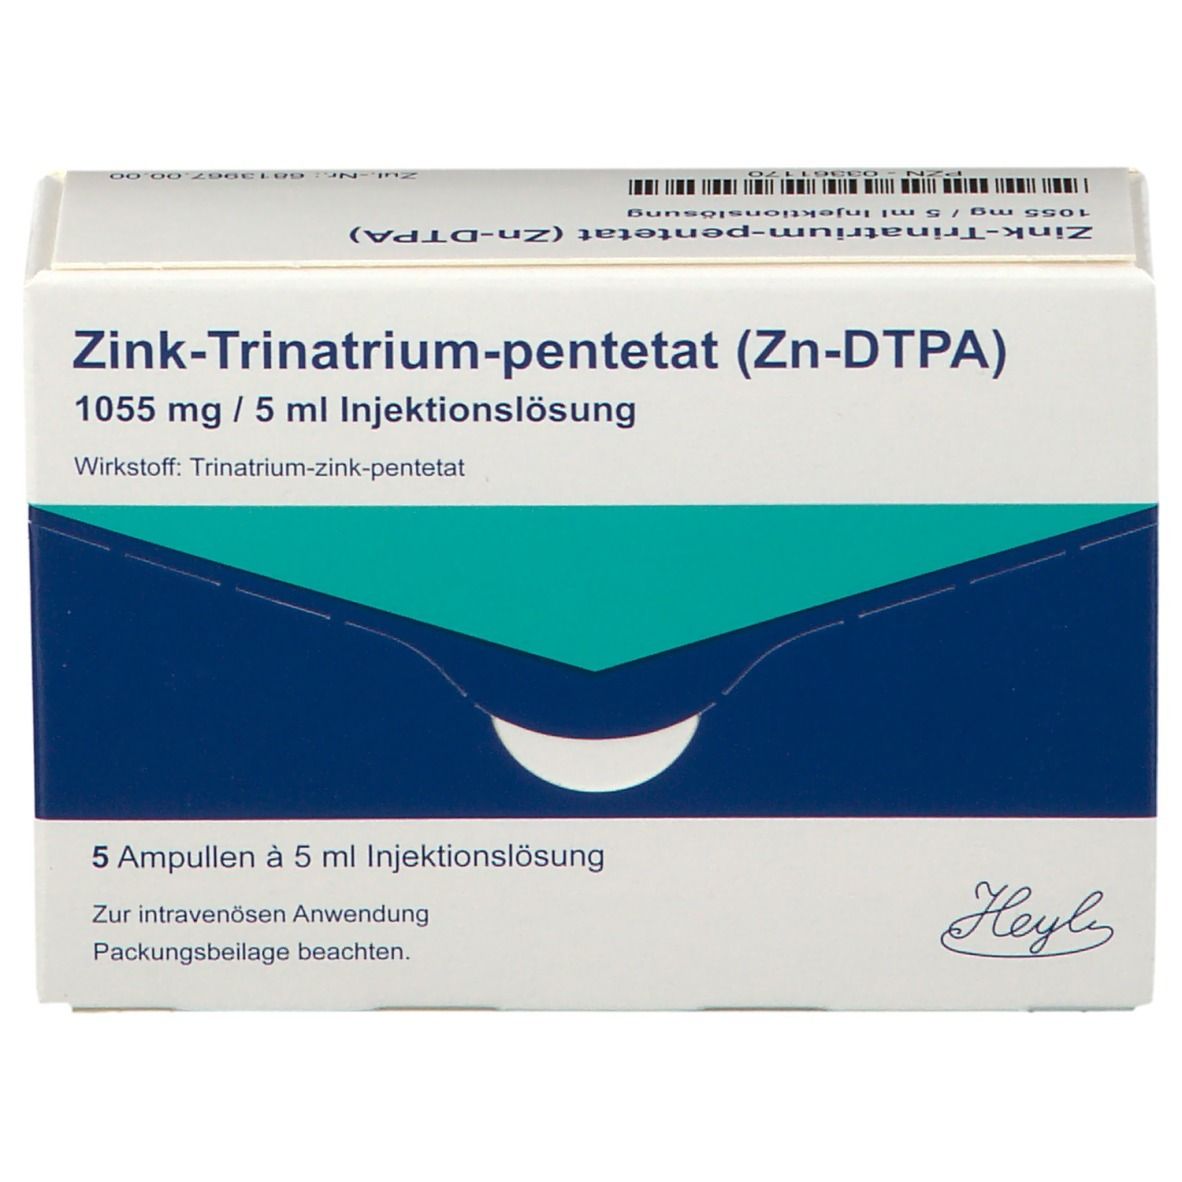 Zink-Trinatrium-pentetat